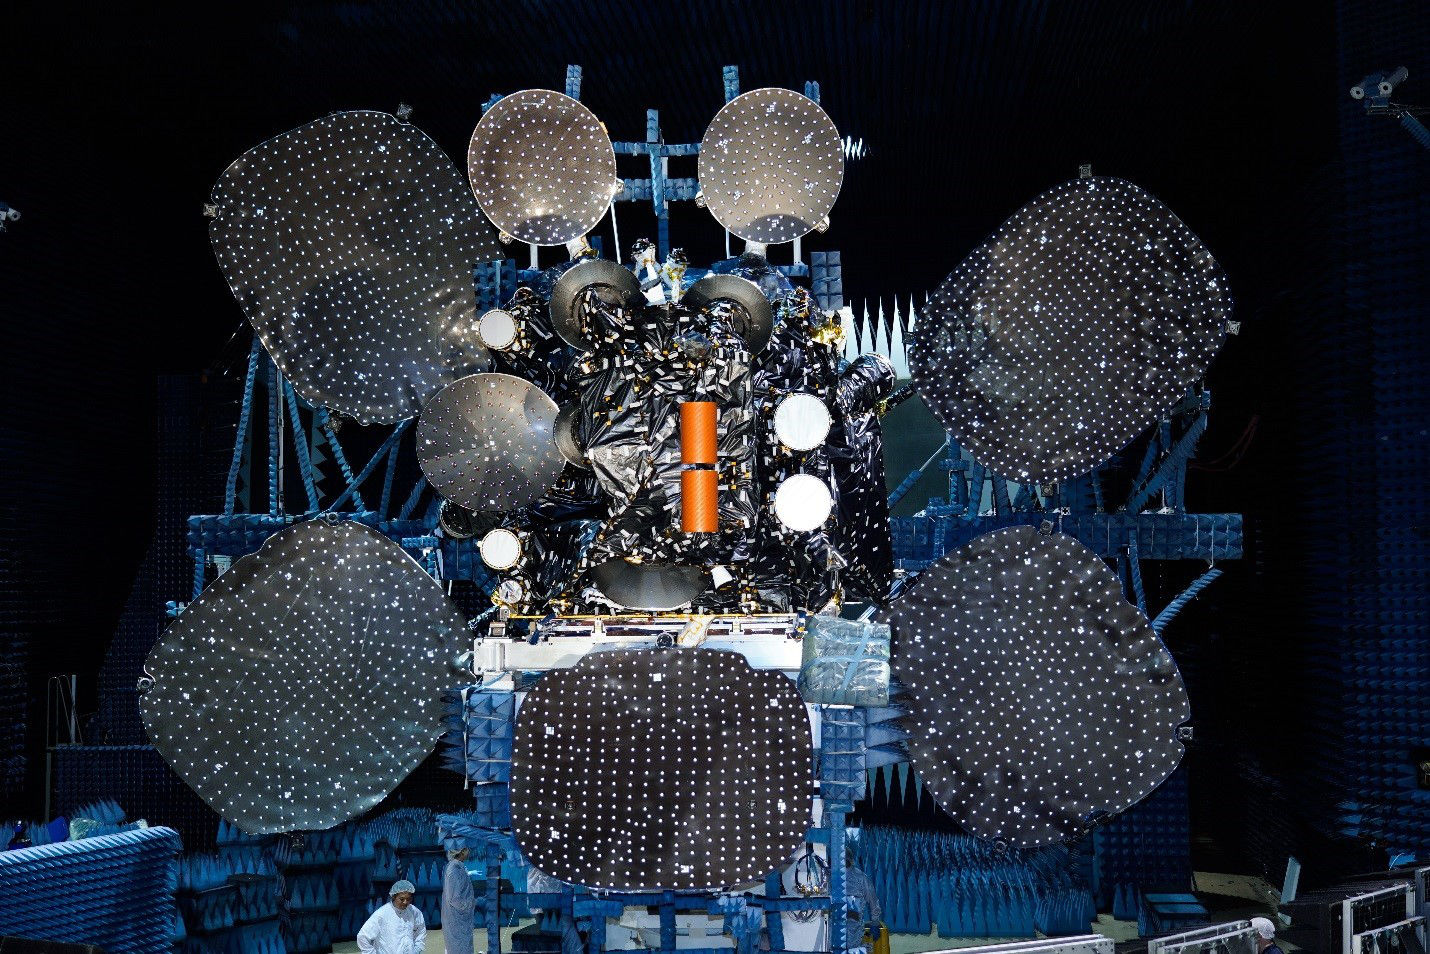 OA Intelsat satellite